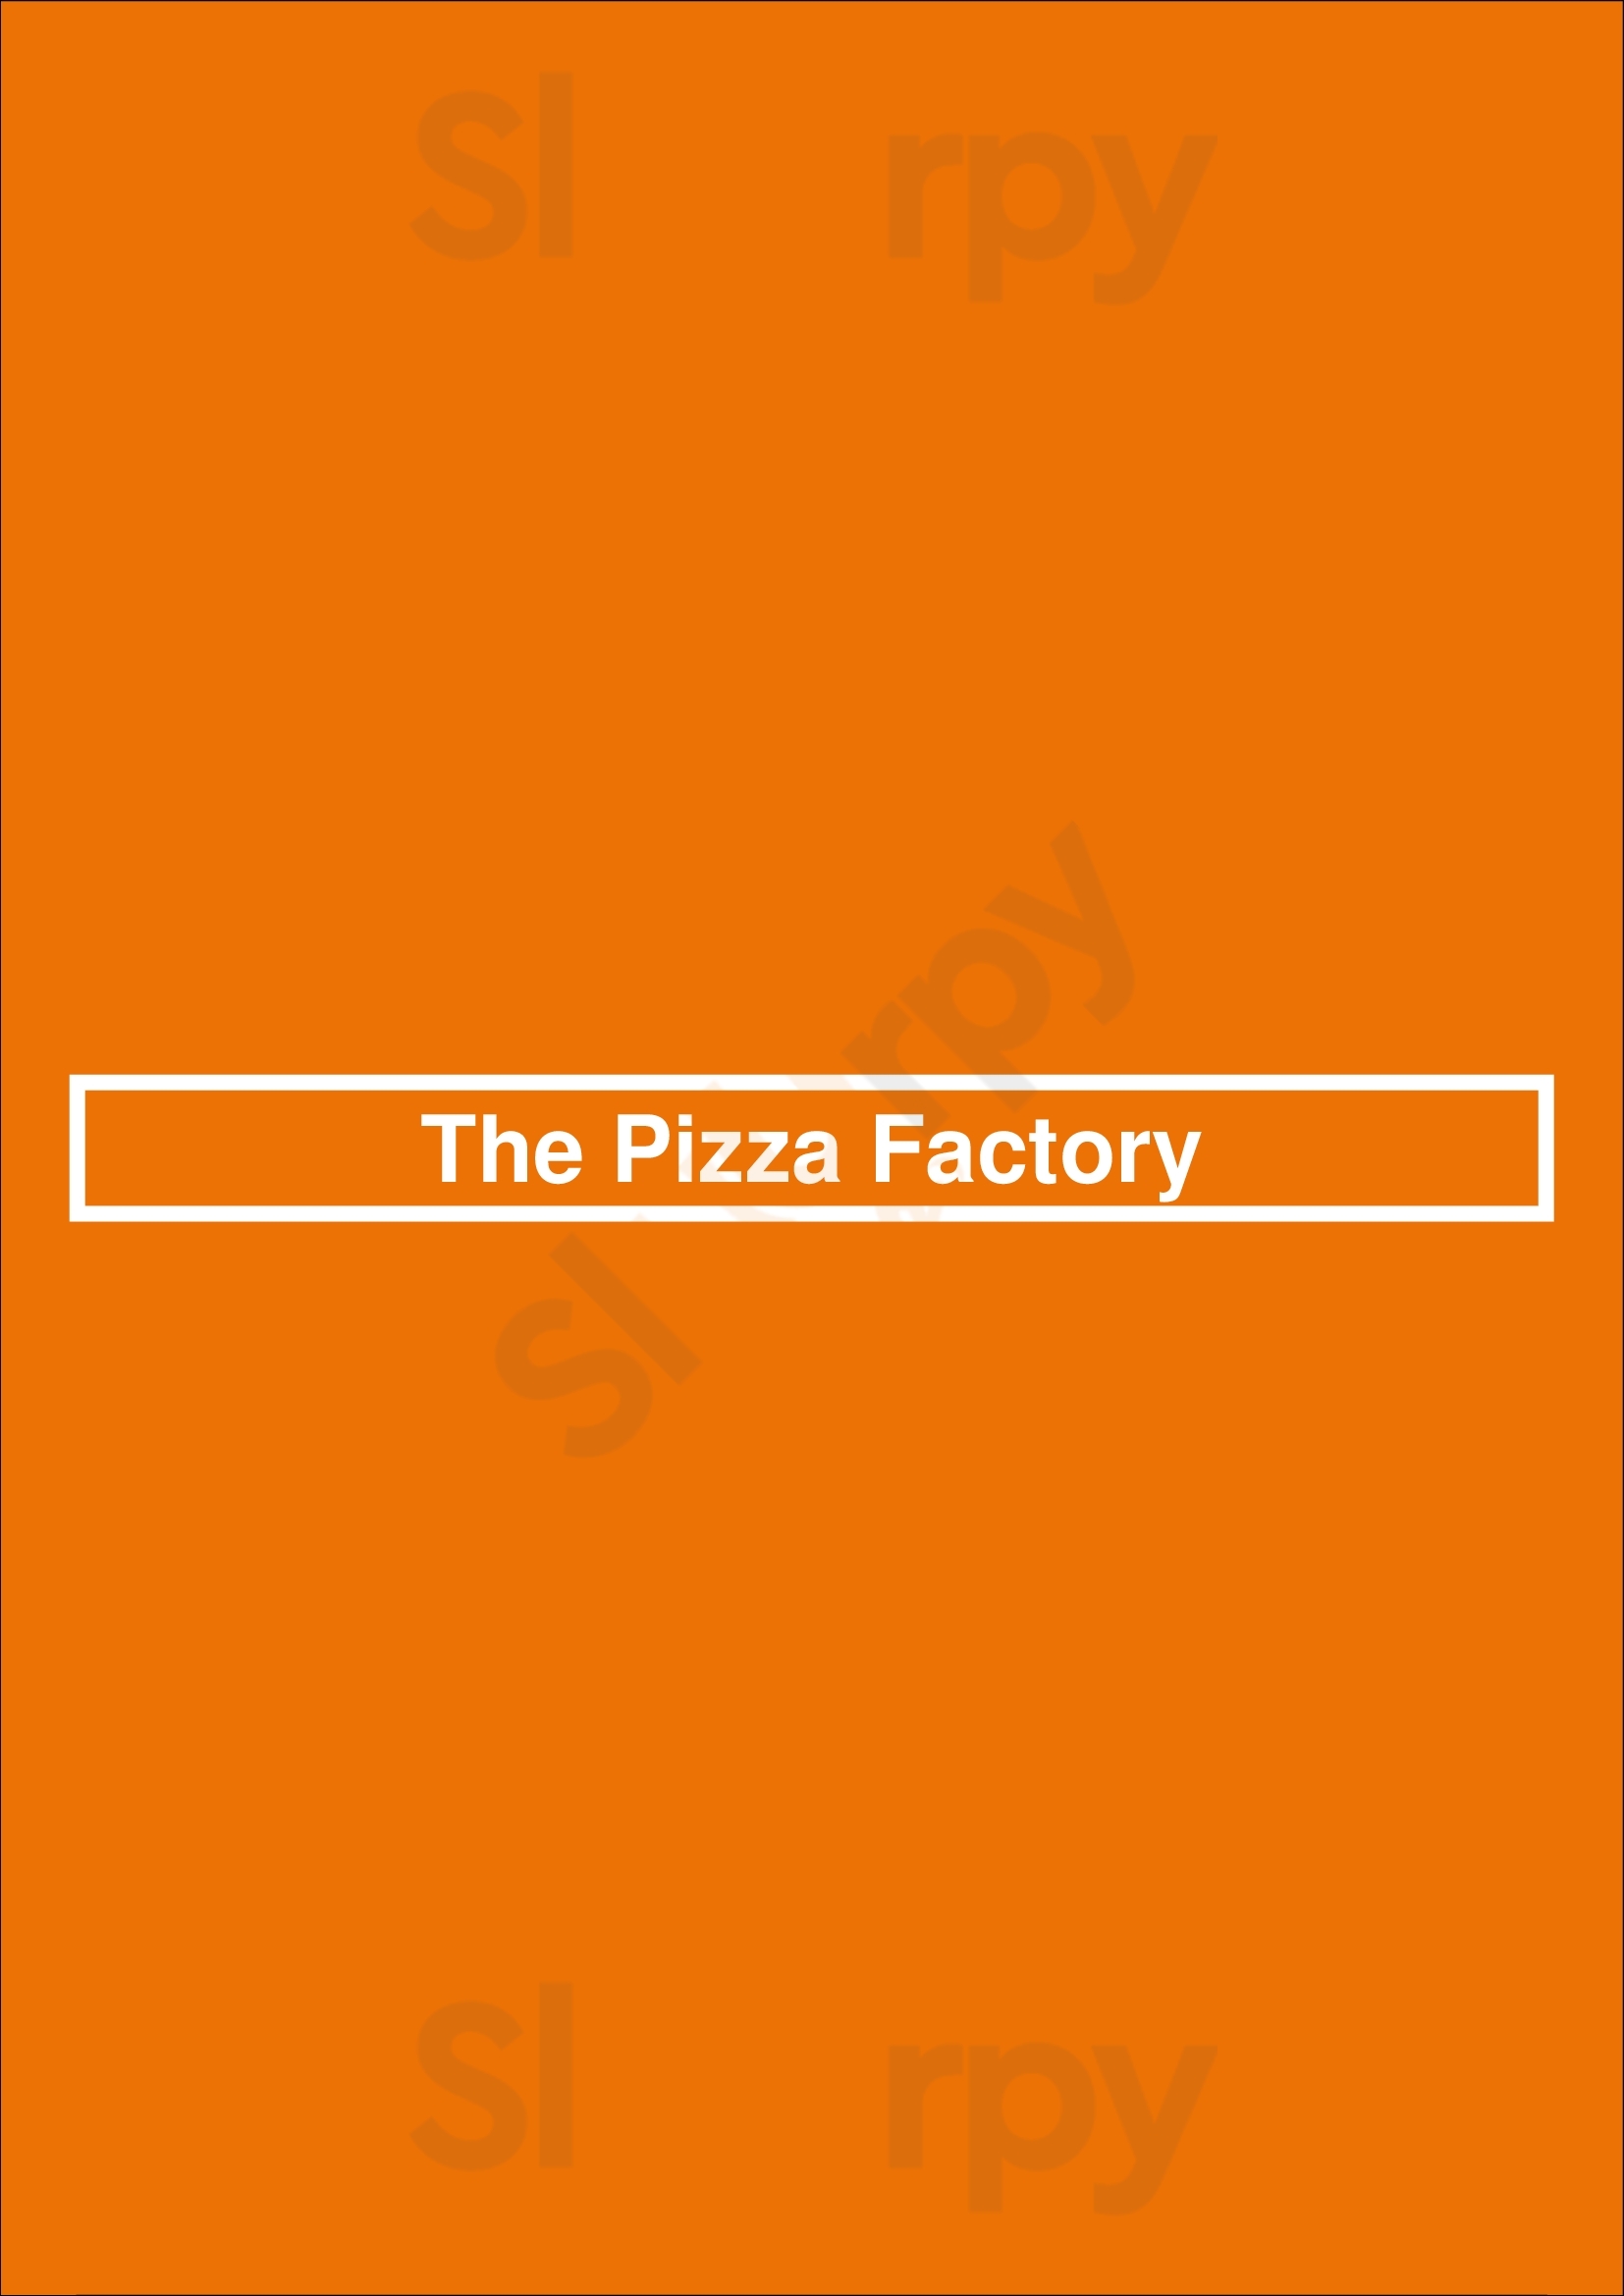 The Pizza Factory Glasgow Menu - 1